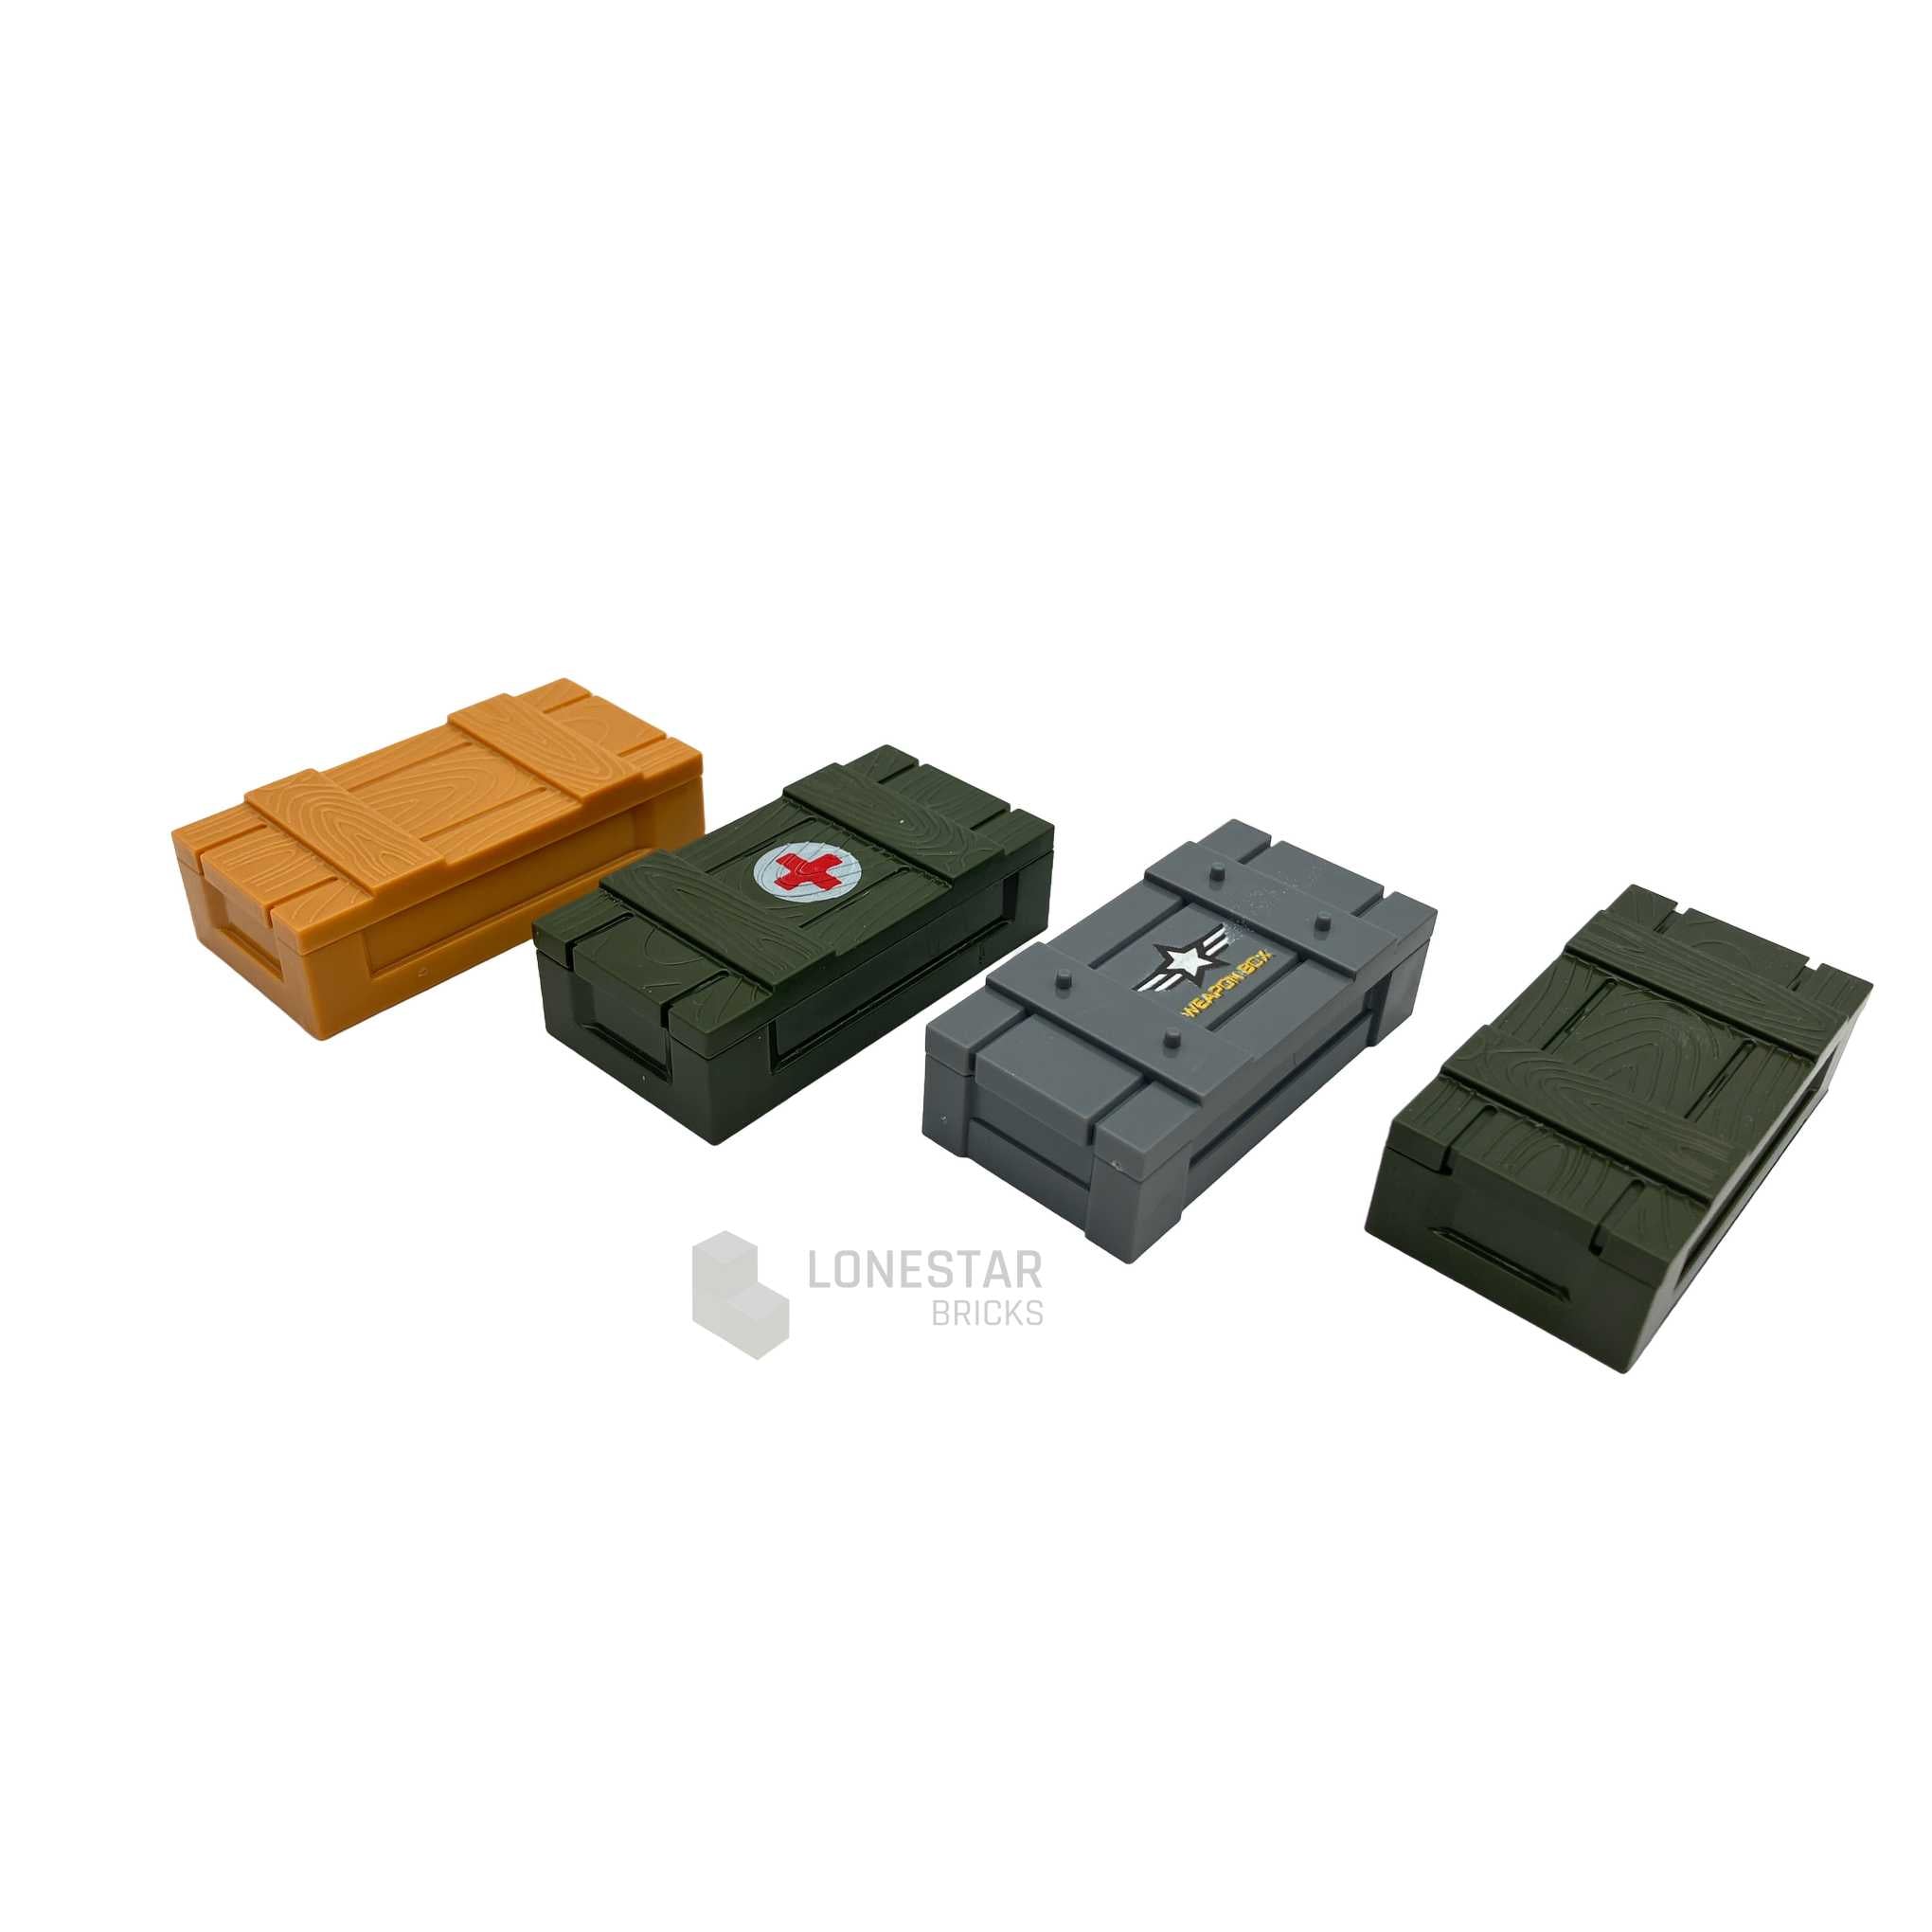 LB-70040 - Militärkisten 4er Pack (Lonestar Bricks)